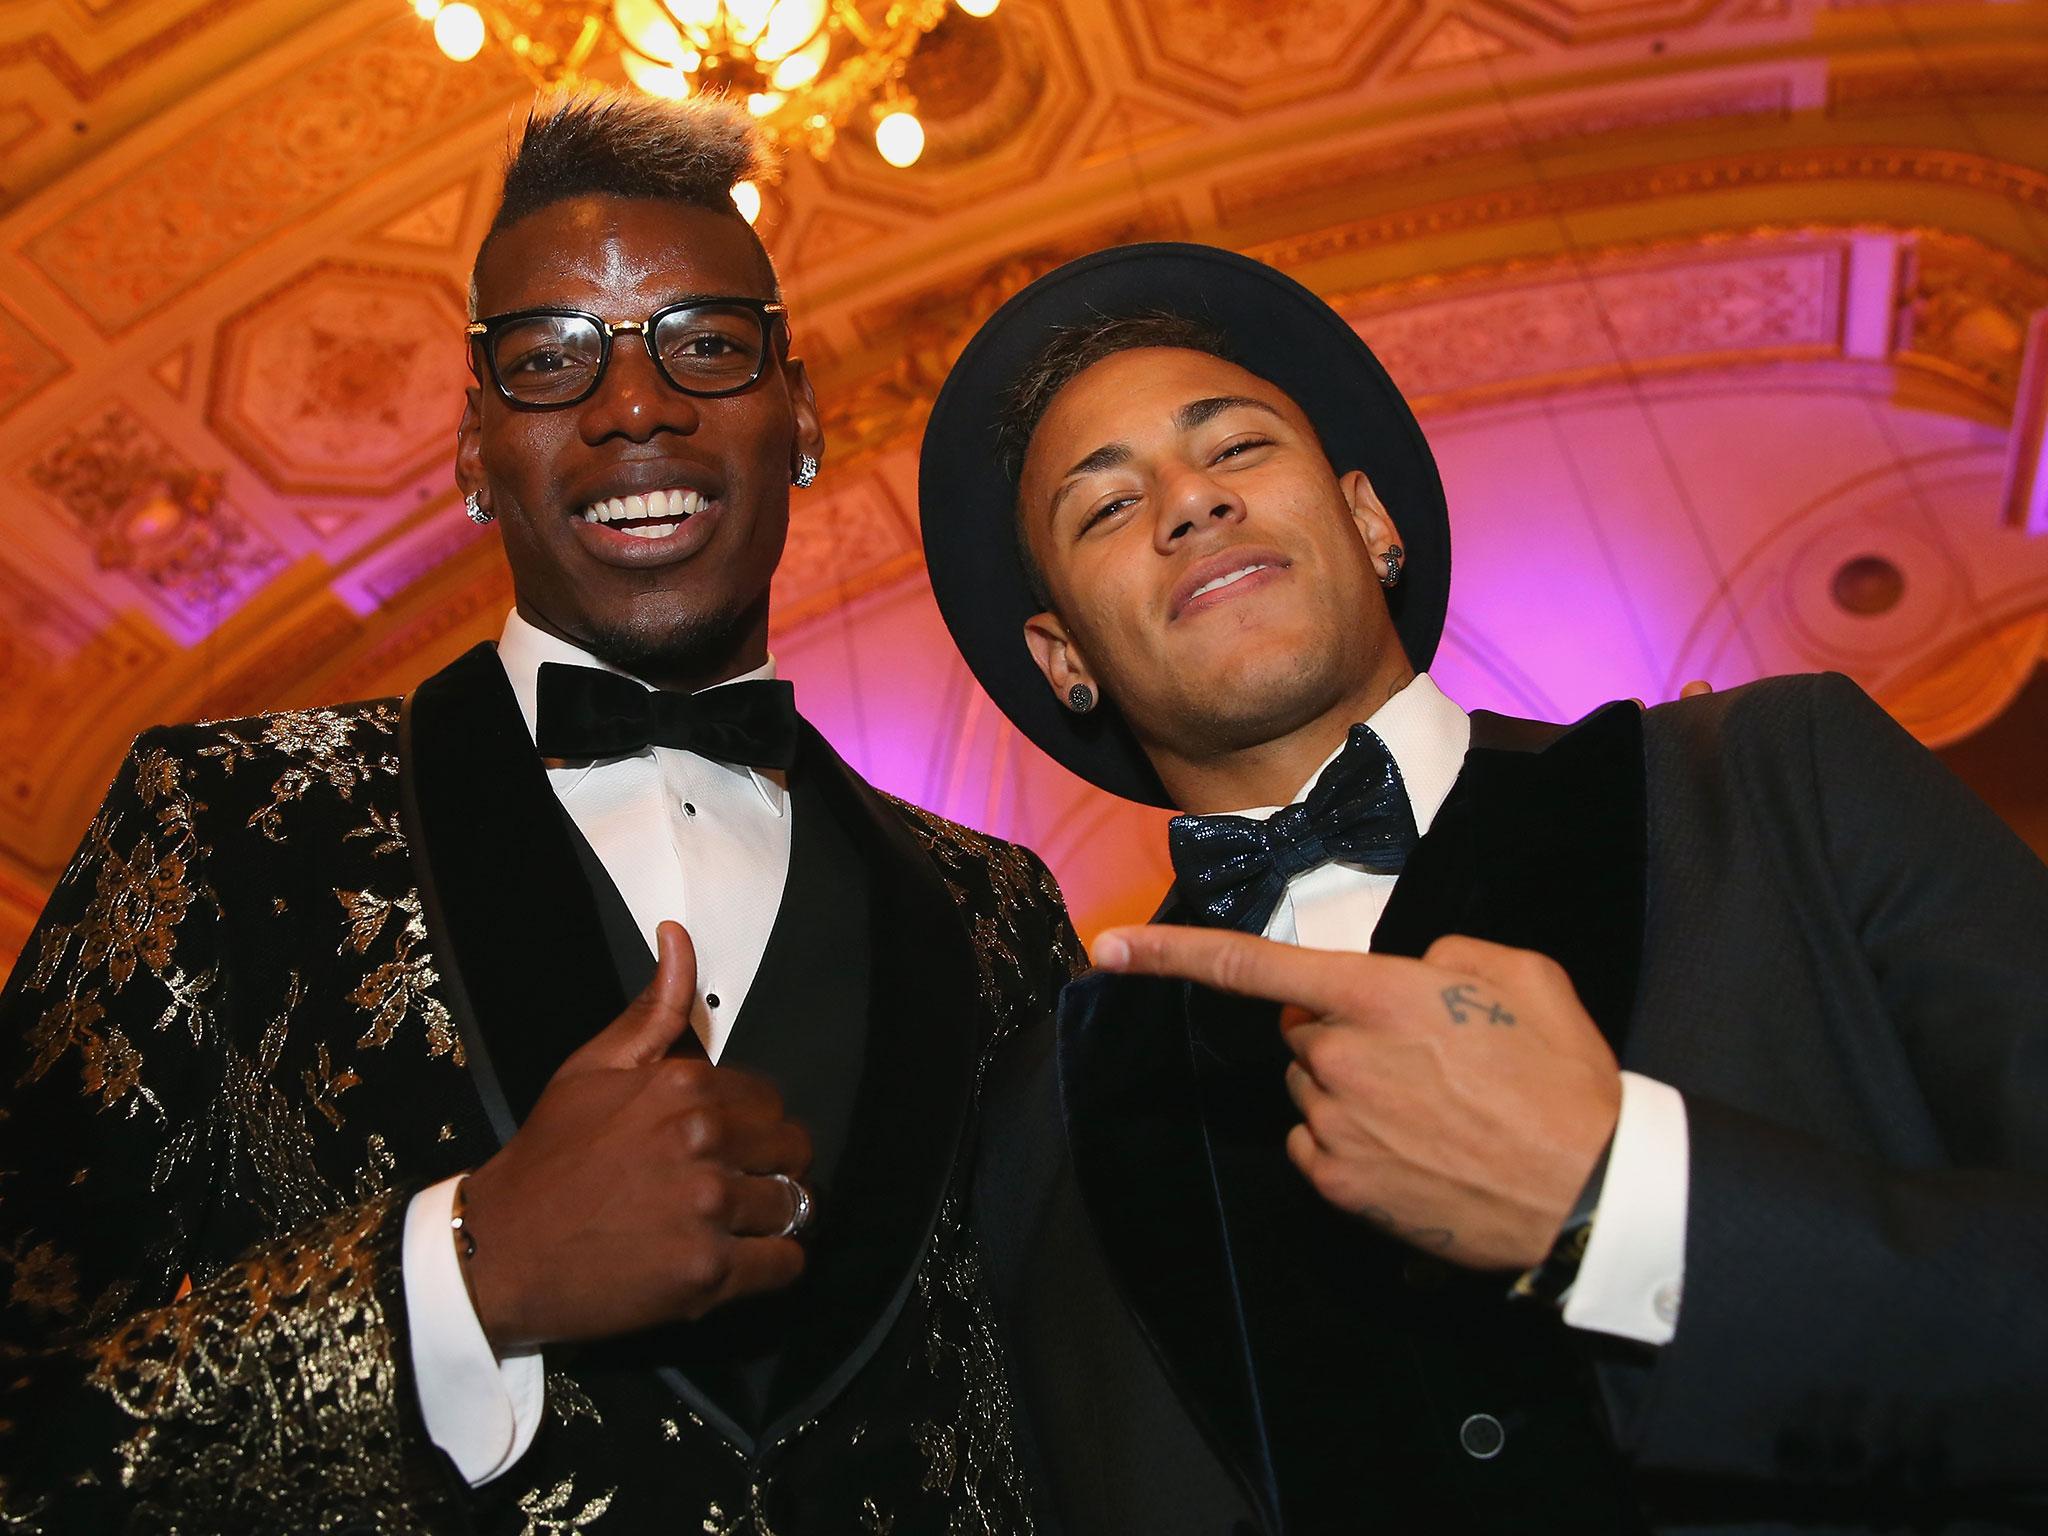 Paul Pogba and Neymar together at the 2015 Ballon 'Or gala